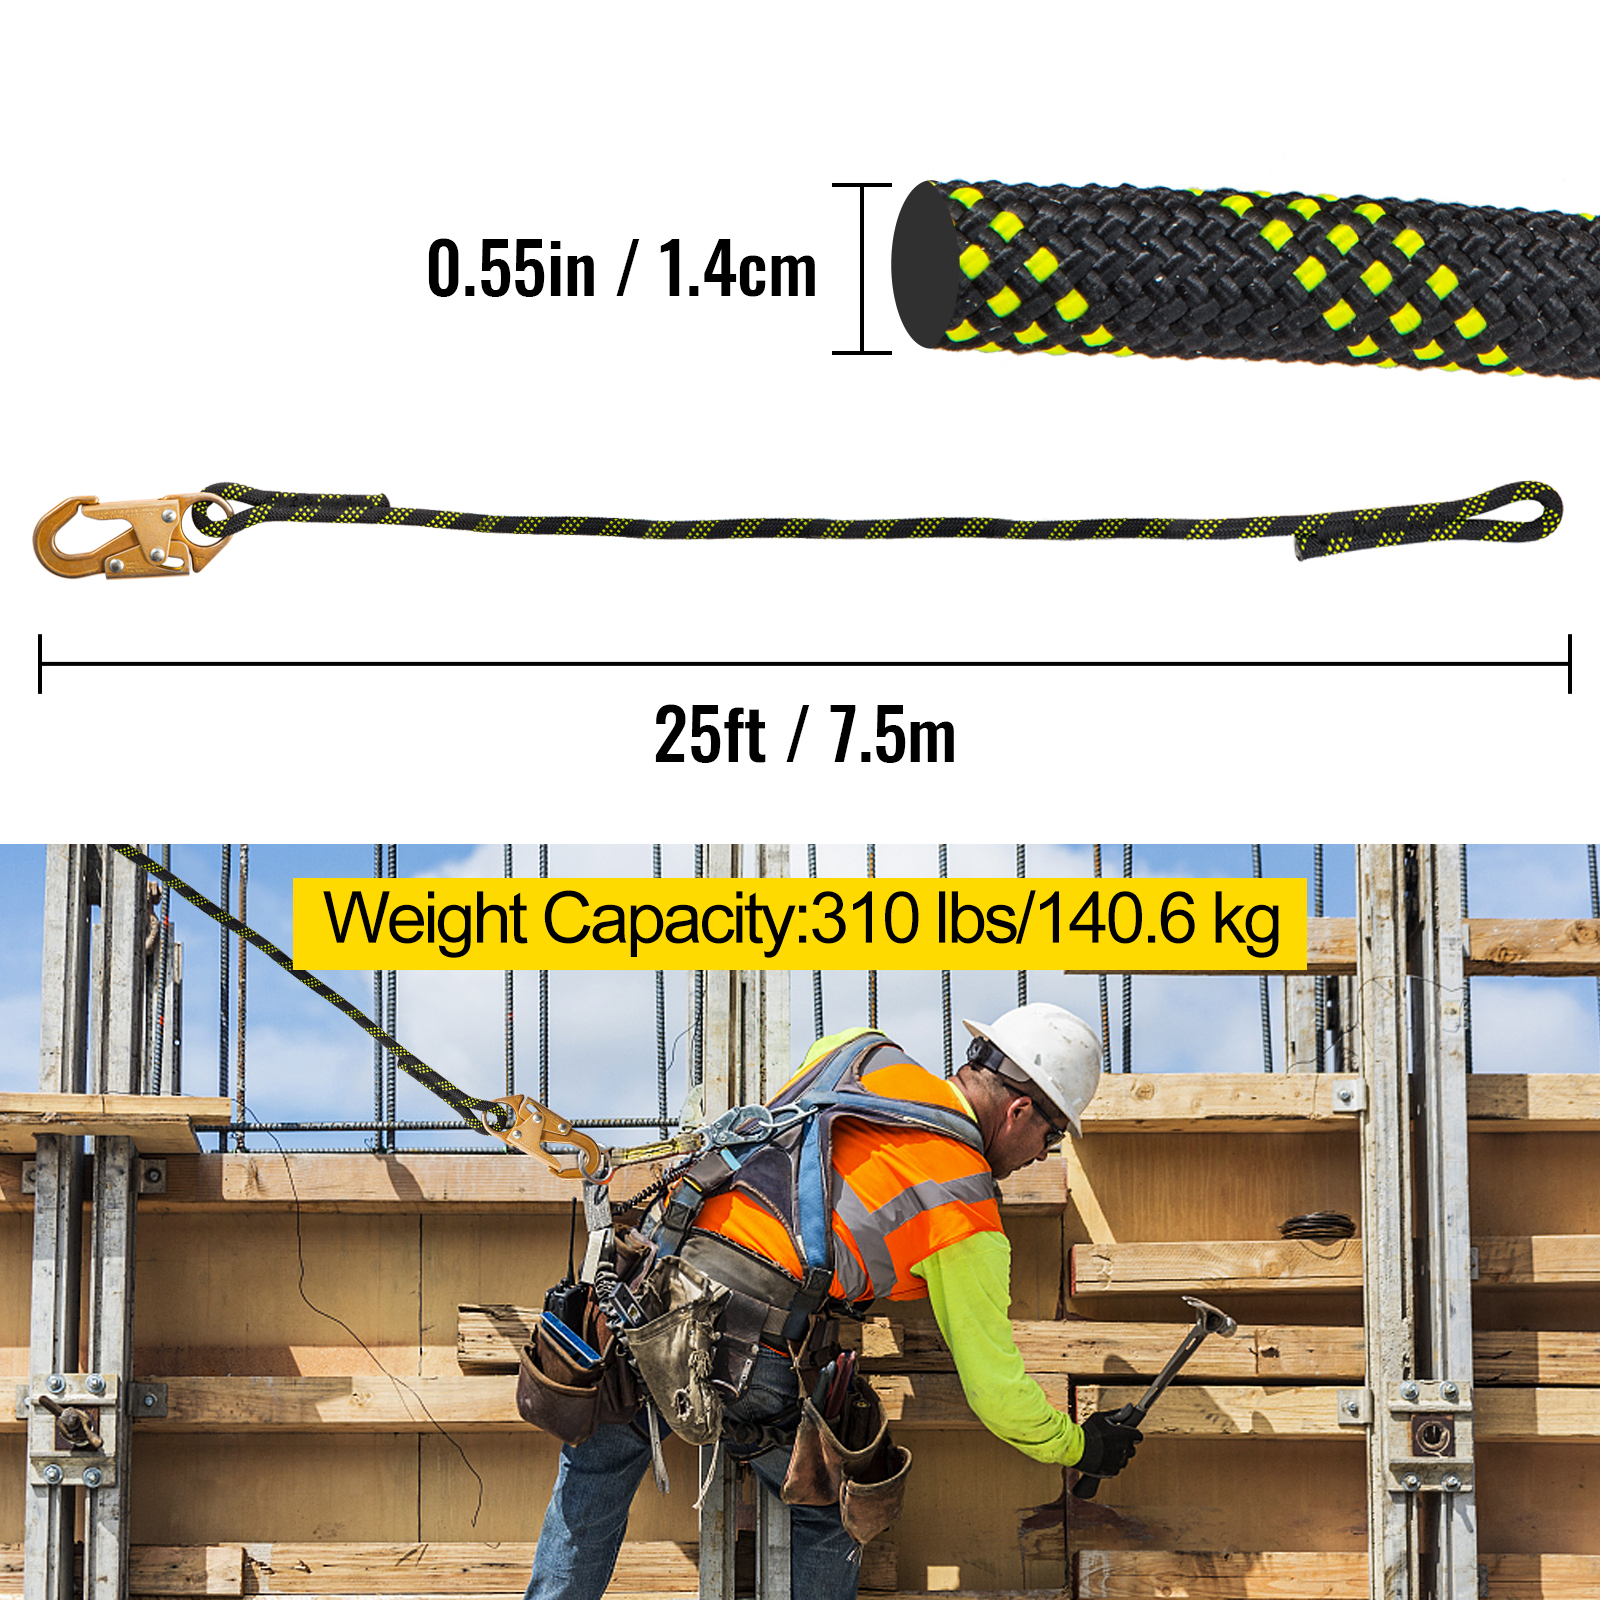 VEVOR Vertical Lifeline Assembly, 25 ft Fall Protection Rope